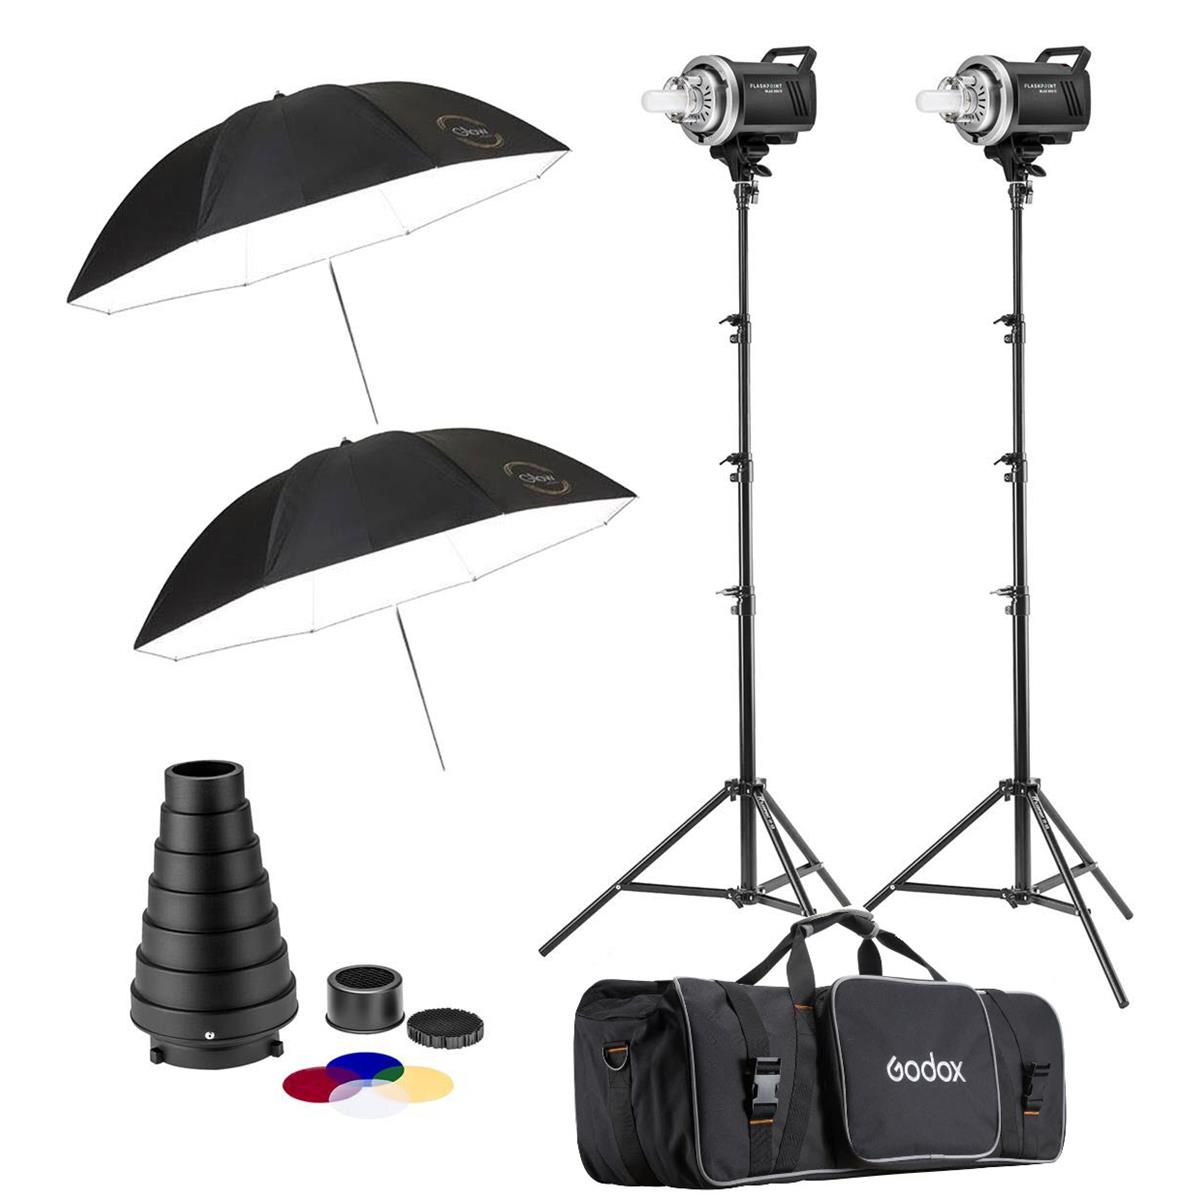 Image of Flashpoint BLAZ 300 R2 2-Monolight Kit w/2x Umbrellas